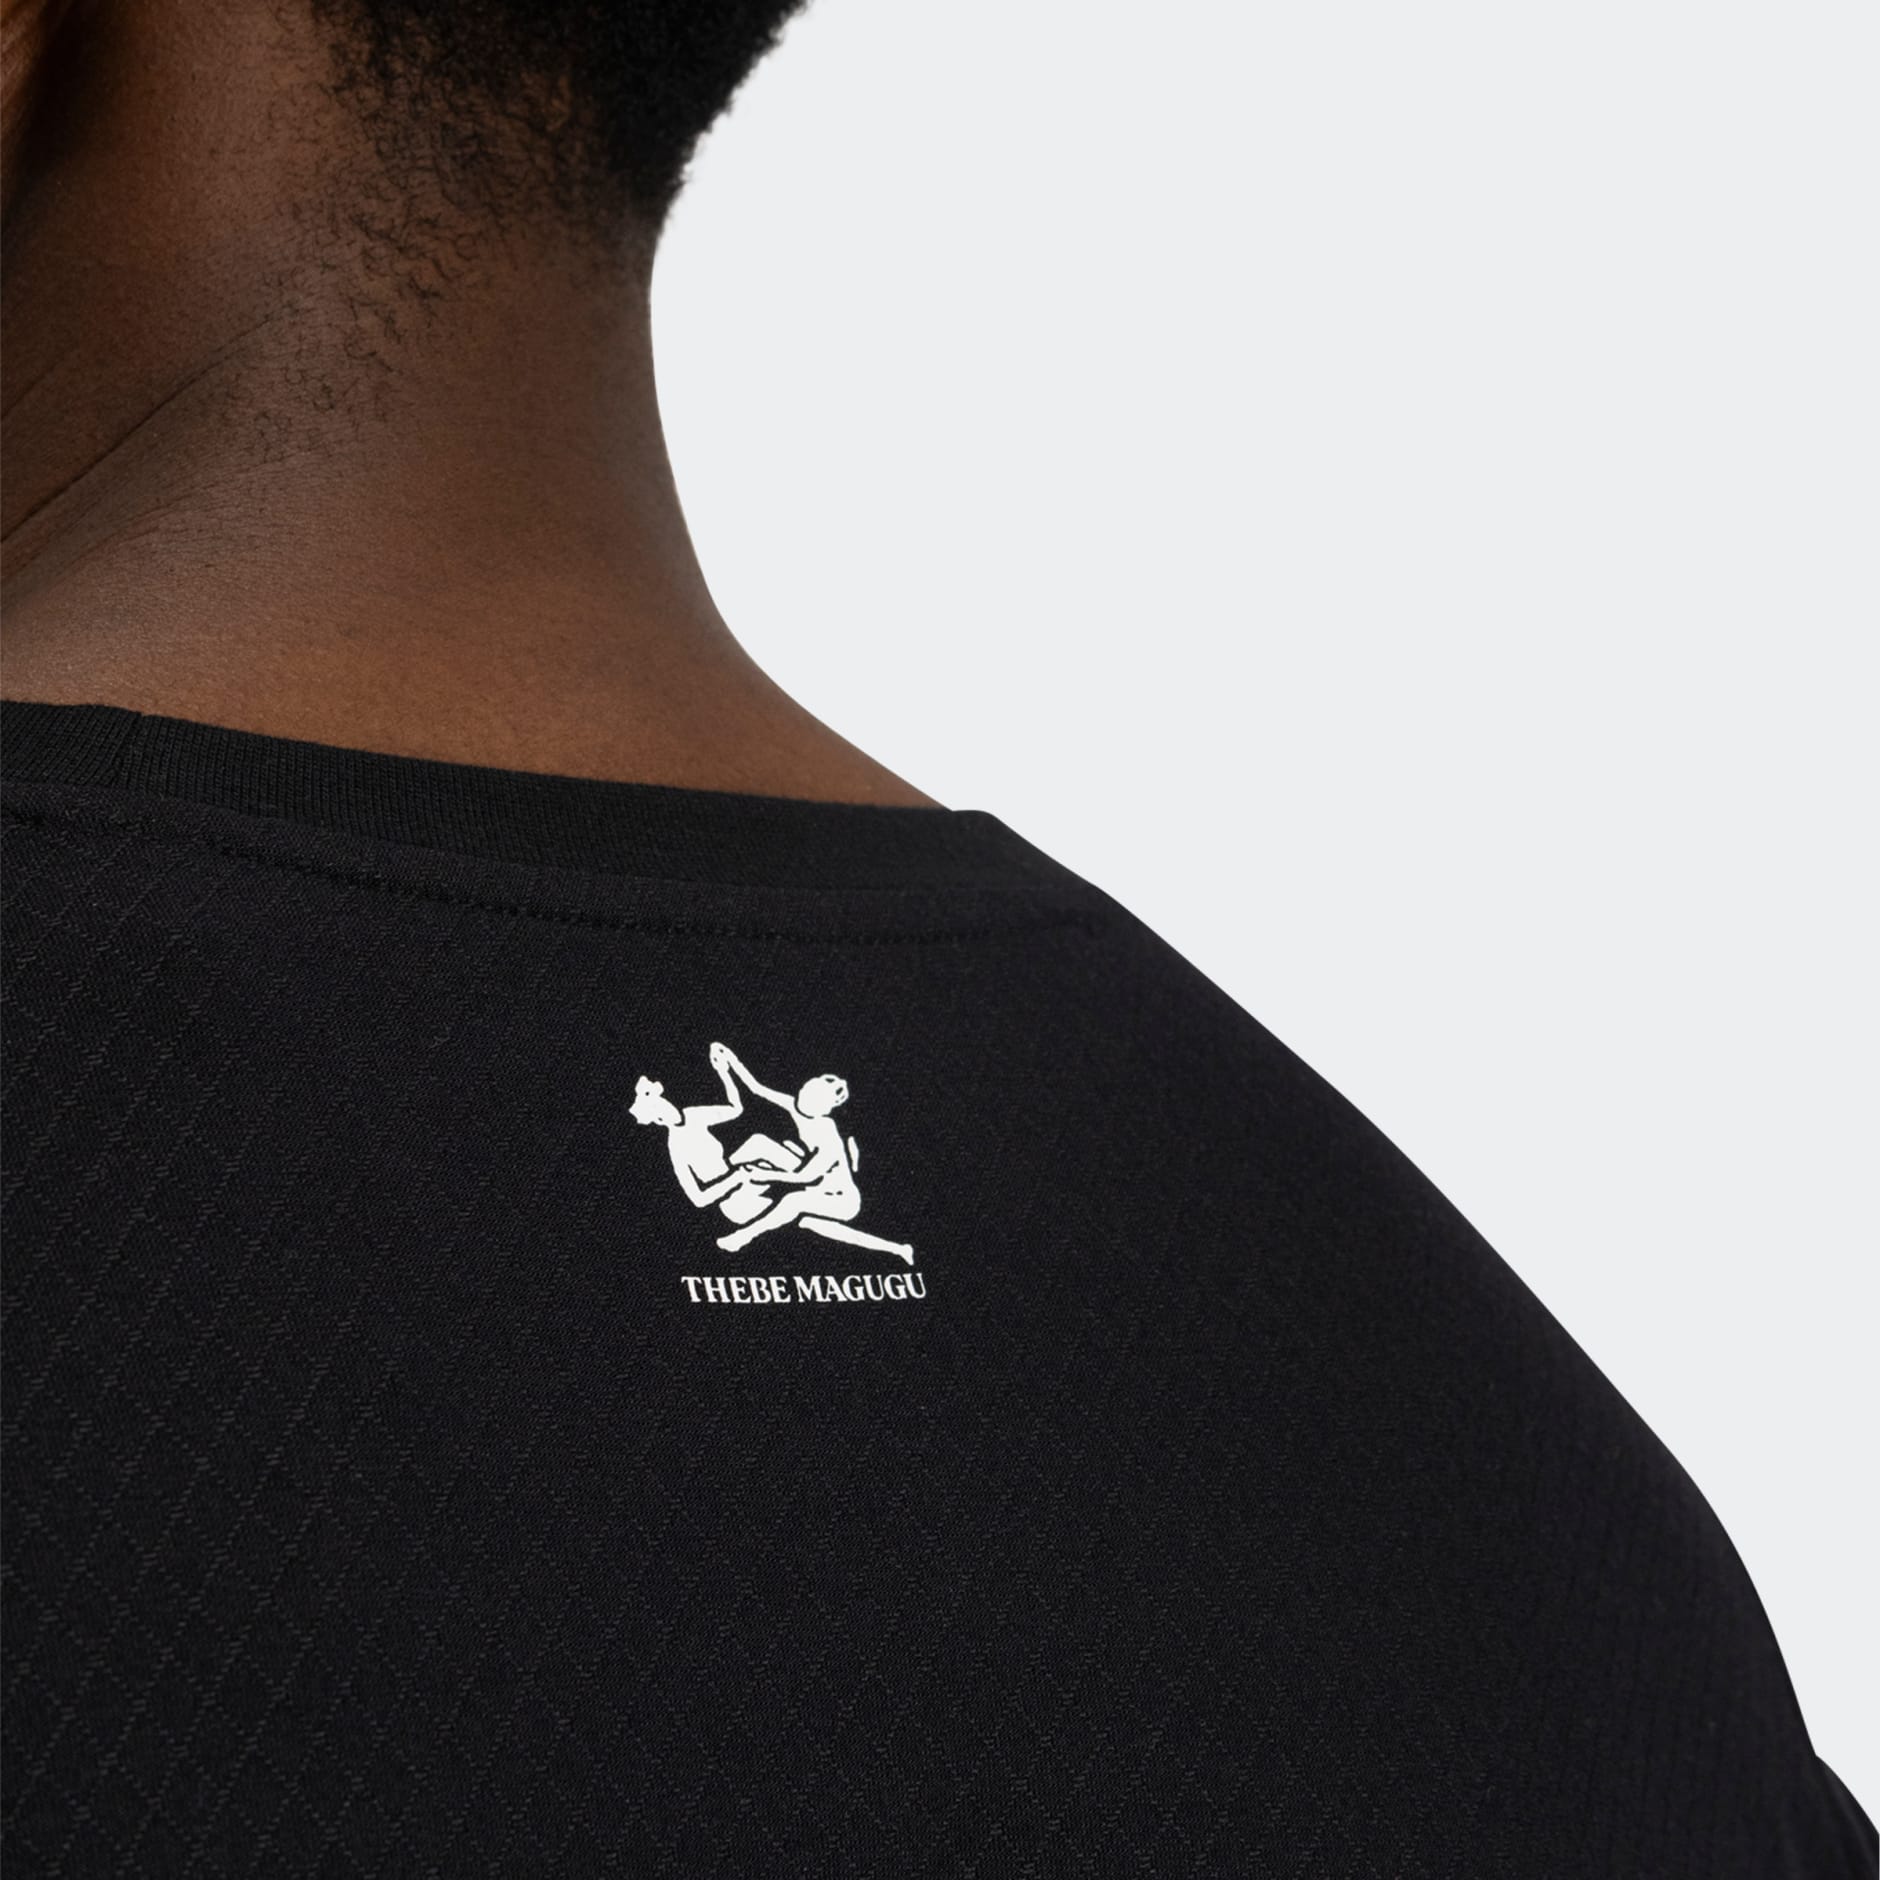 Clothing - Orlando Pirates Cotton Tee - Black | adidas South Africa